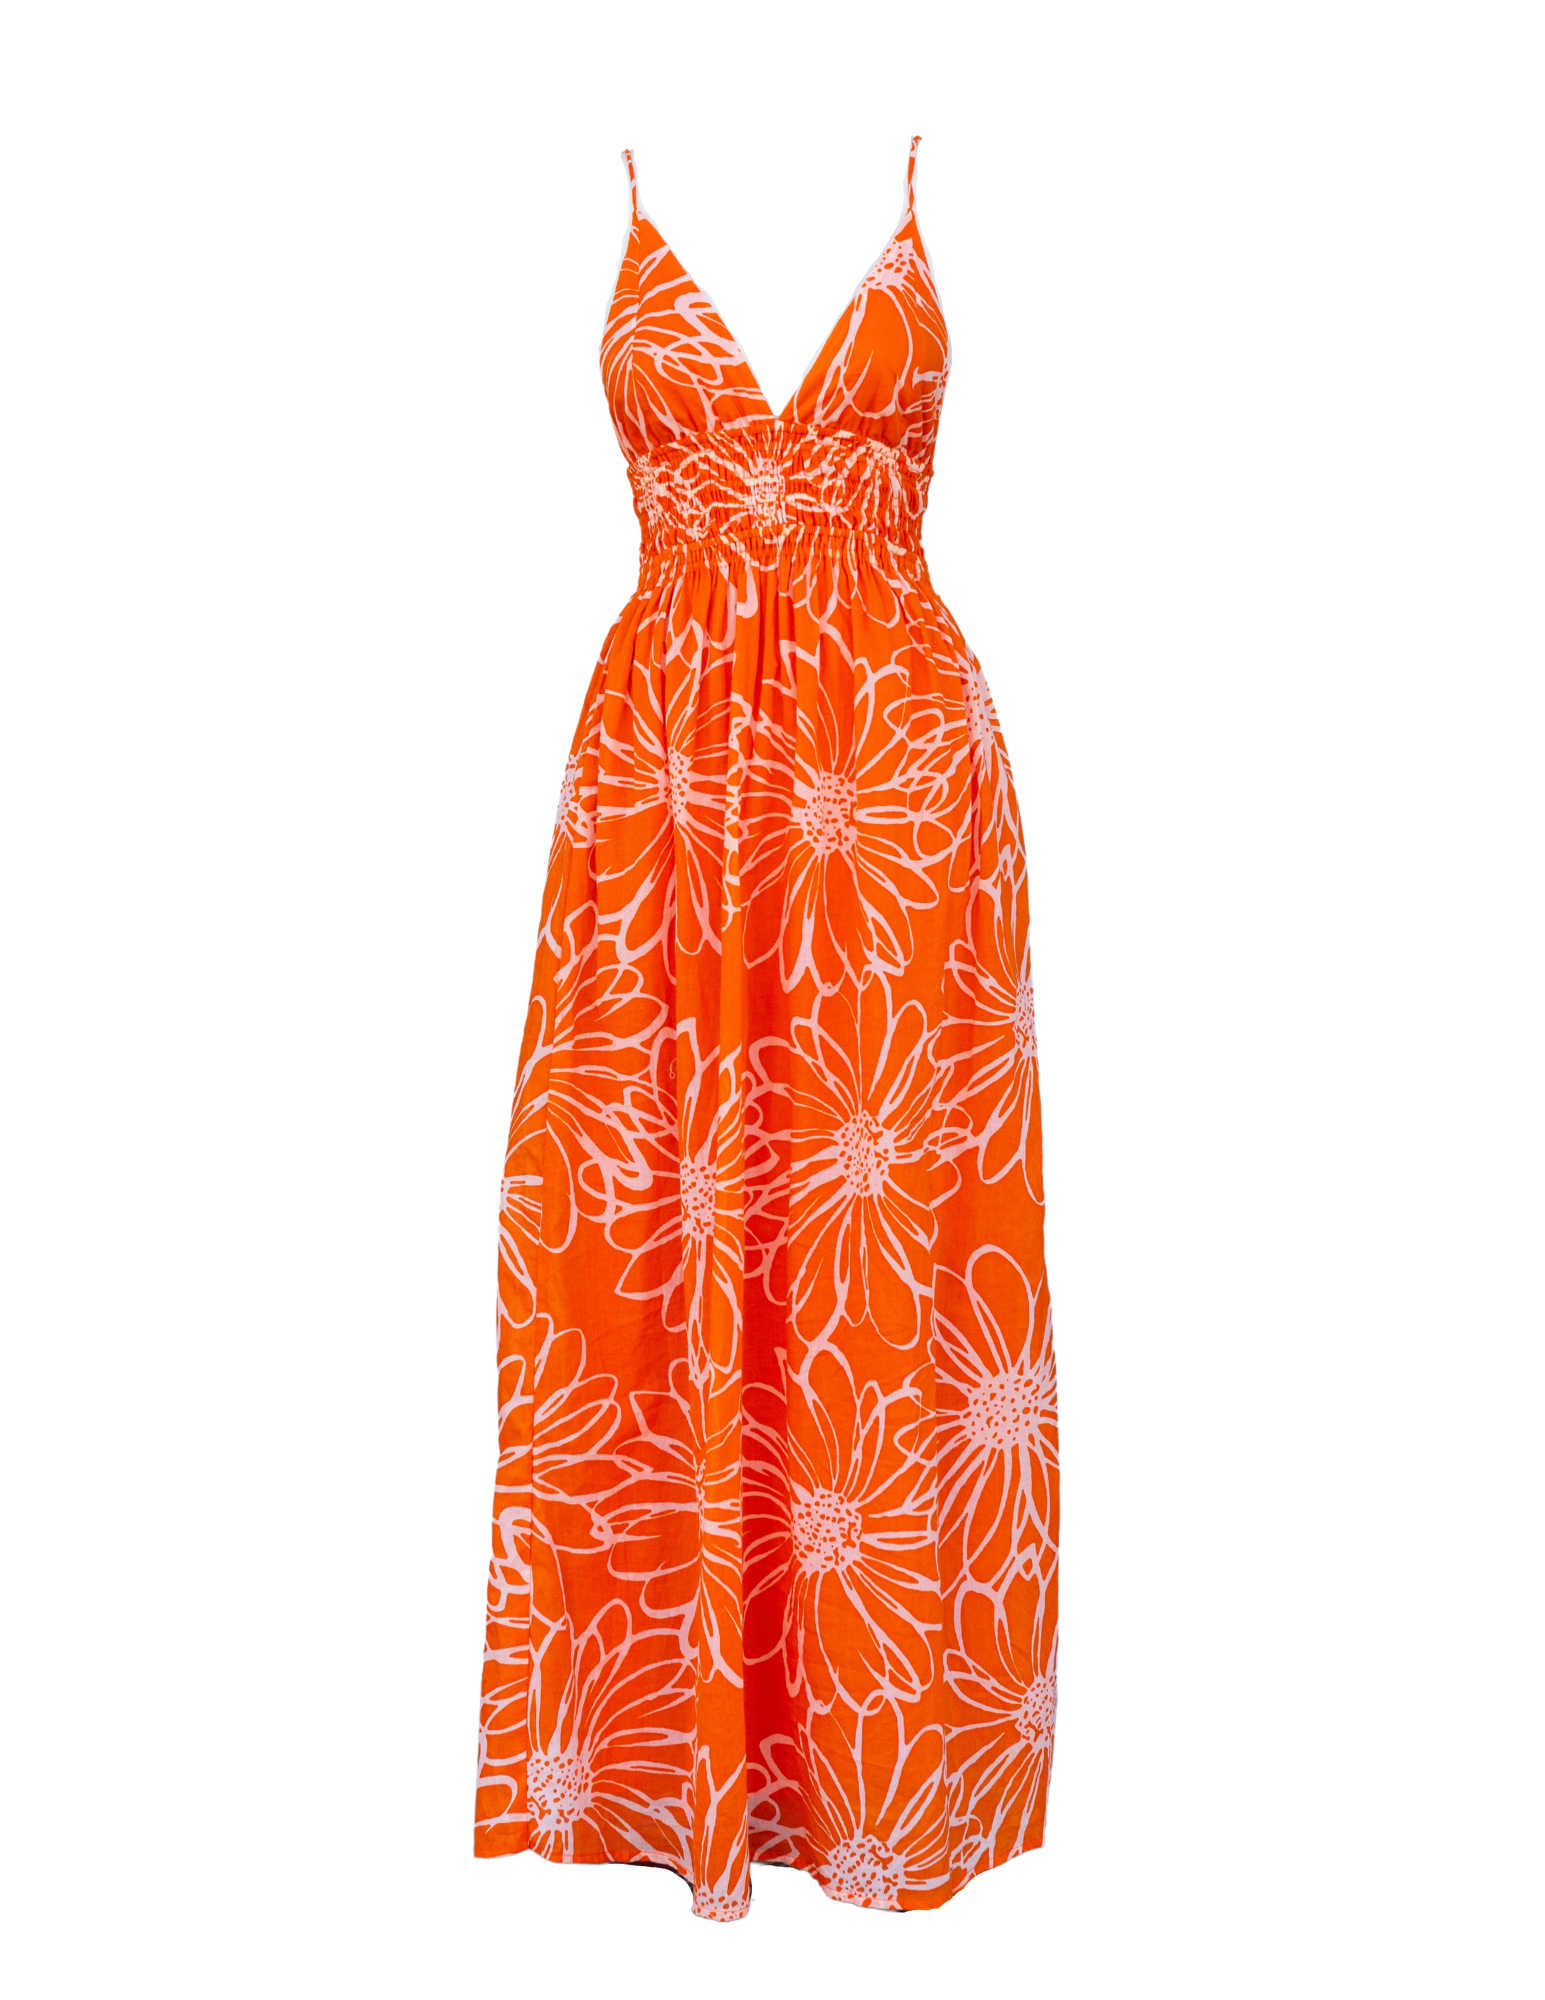 Bisetta Maxi Dress - La Sirena Floral Print Orange